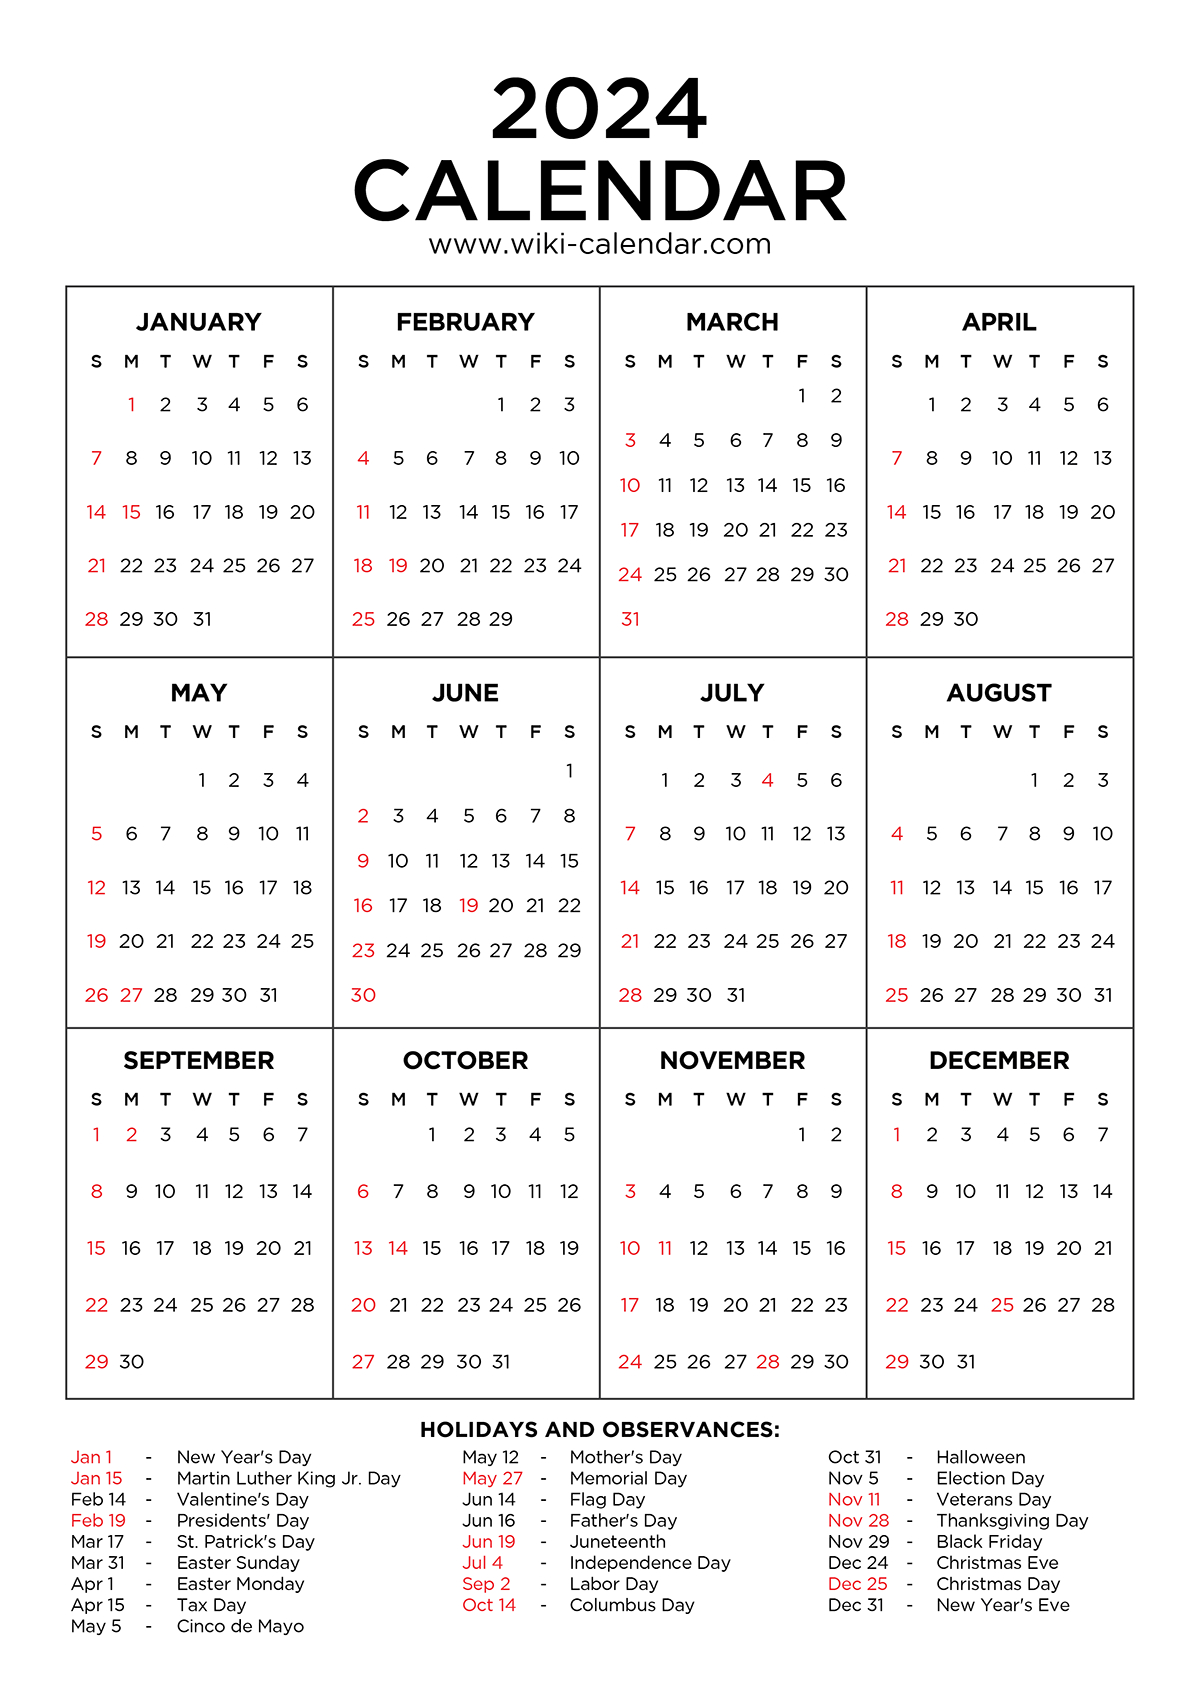 Year 2024 Calendar Printable With Holidays - Wiki Calendar | Free Printable Calendar 2024 Yearly With Holidays